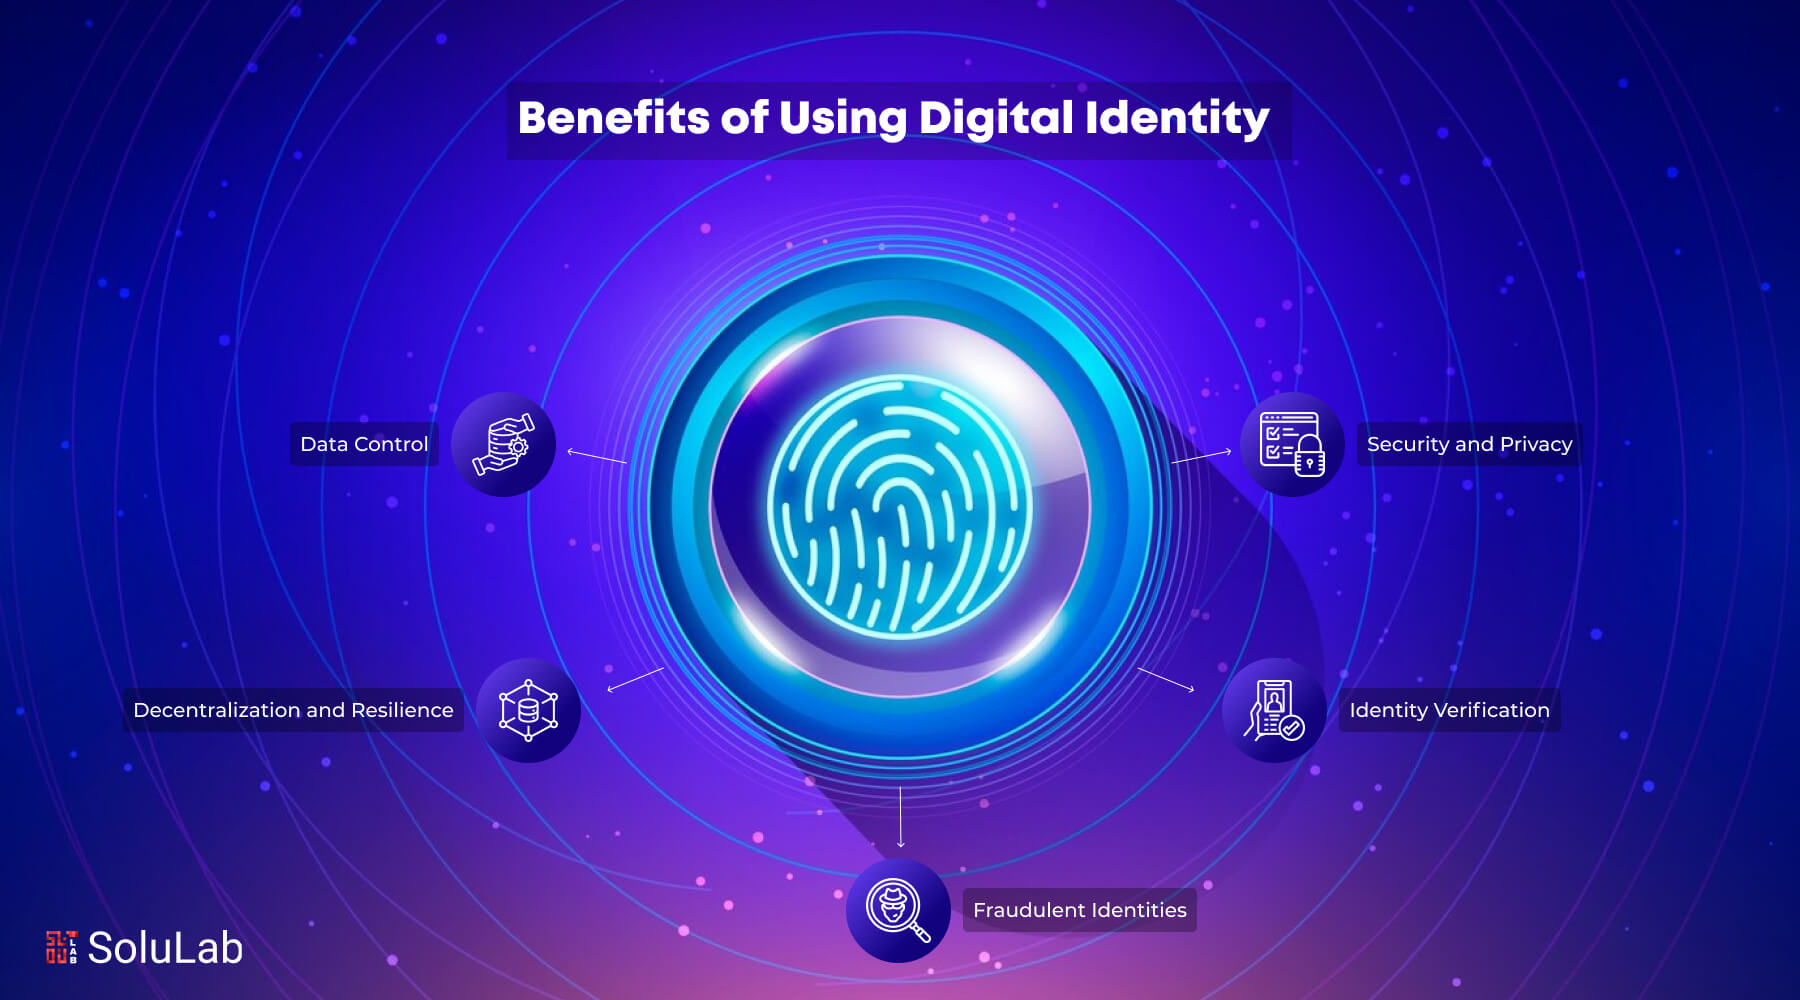 Benefits of Using Digital Identity with Blockchain